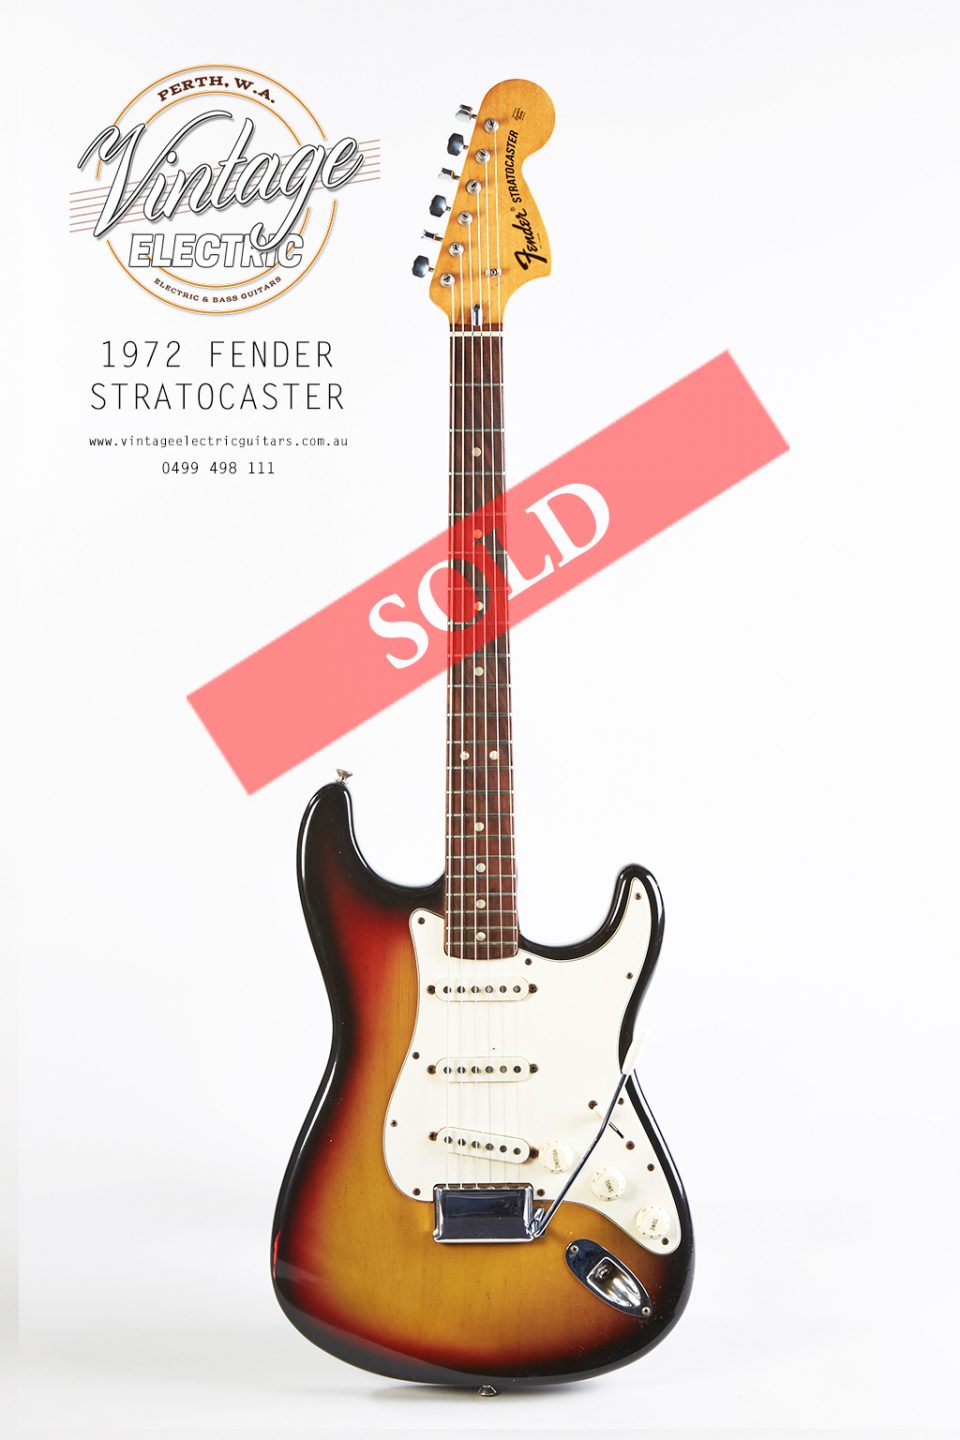 Soda water winner Chair 1972 Fender Stratocaster Guitar | Vintage Electric